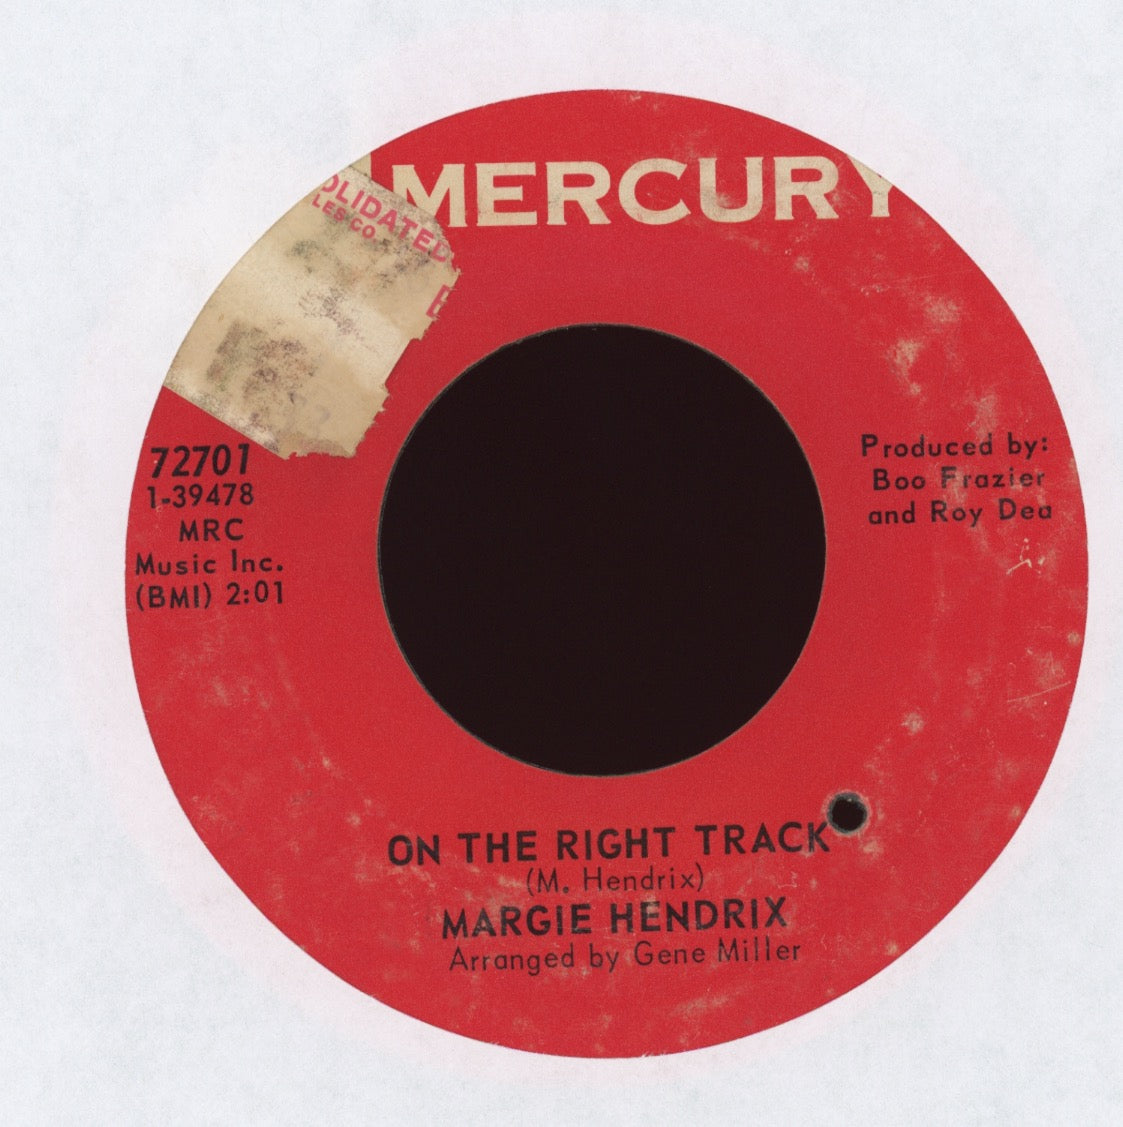 Margie Hendrix - Restless on Mercury